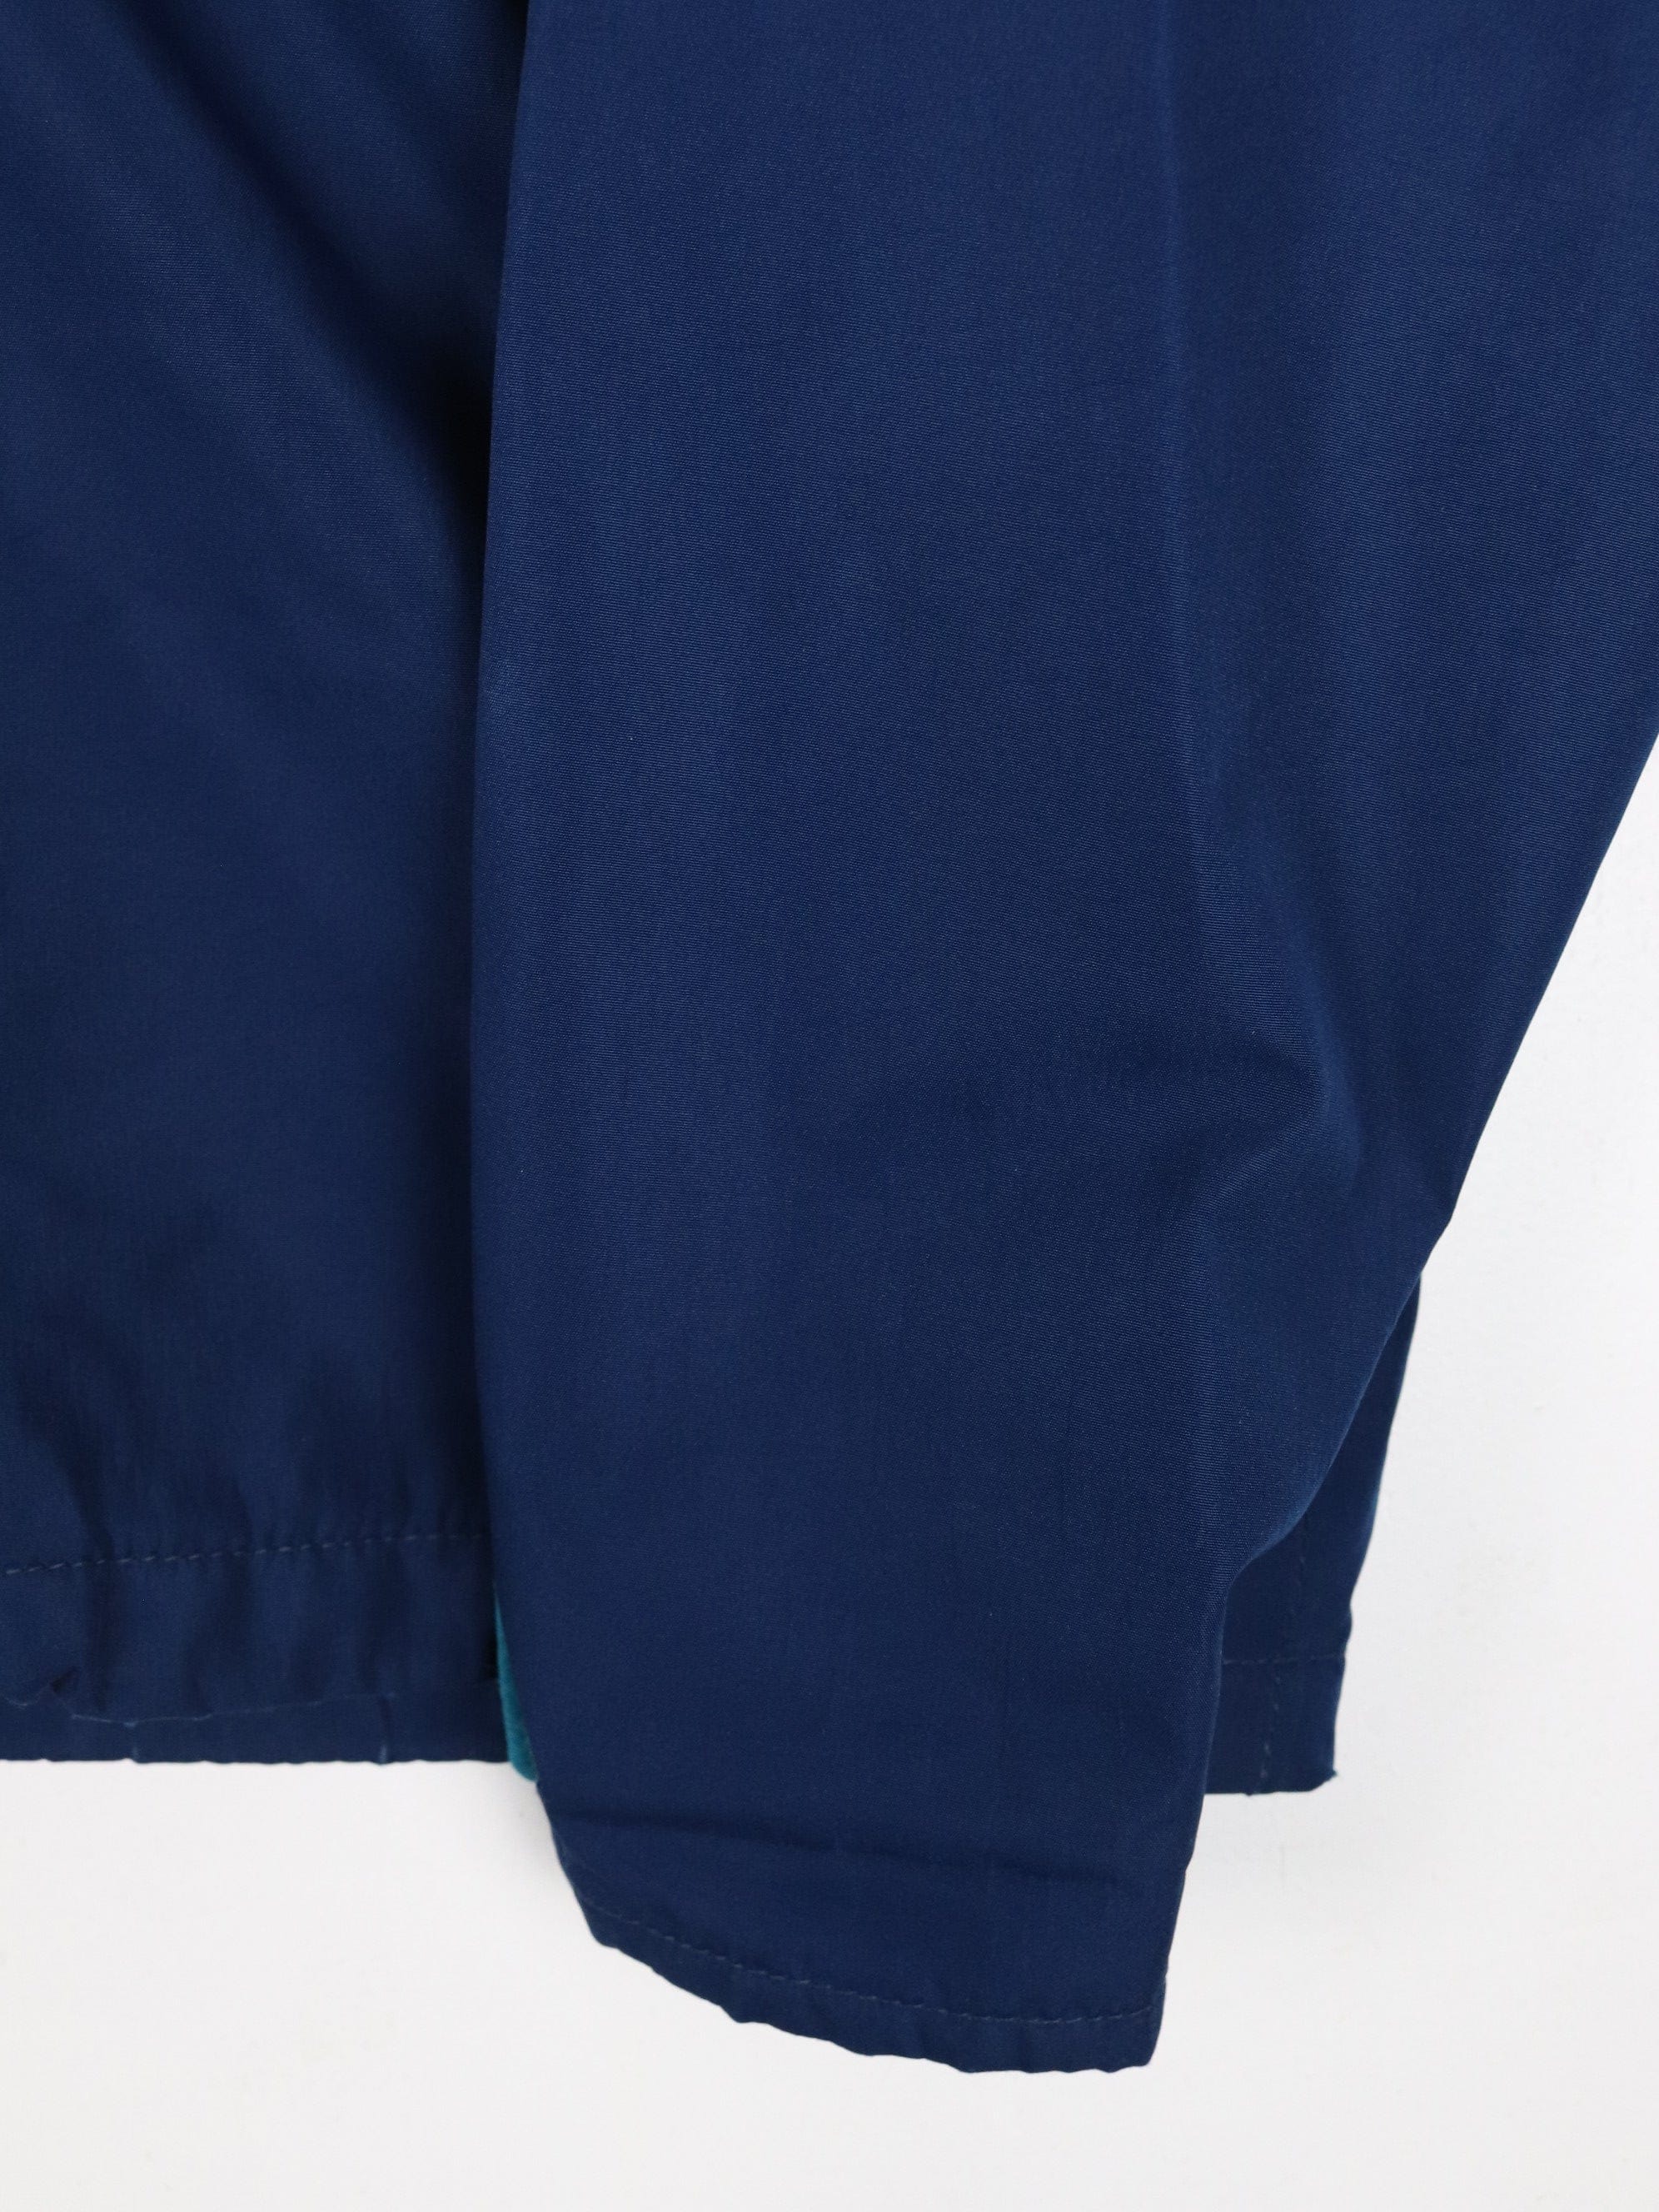 Vintage Sierra Designs Jacket Adult Medium Blue Parka Gore Tex Coat Outdoor